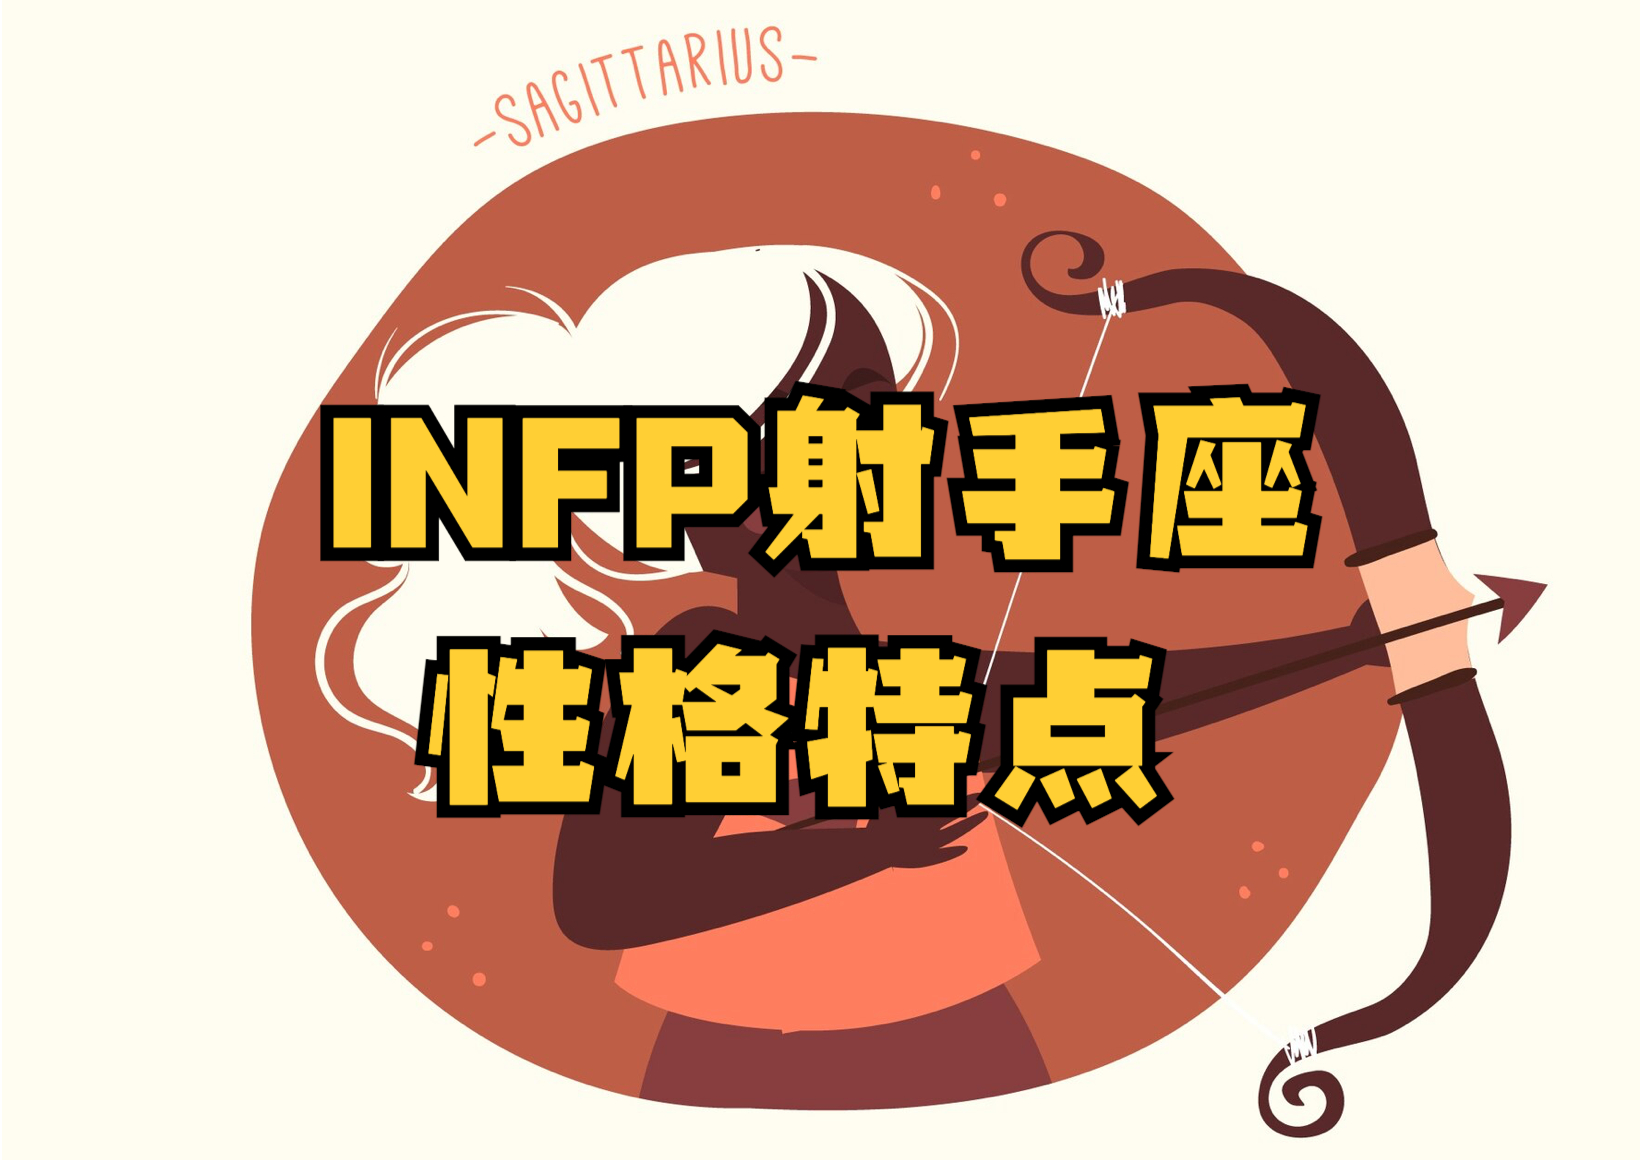 MBTI and horoscope: Analysis of INFP Sagittarius personality characteristics